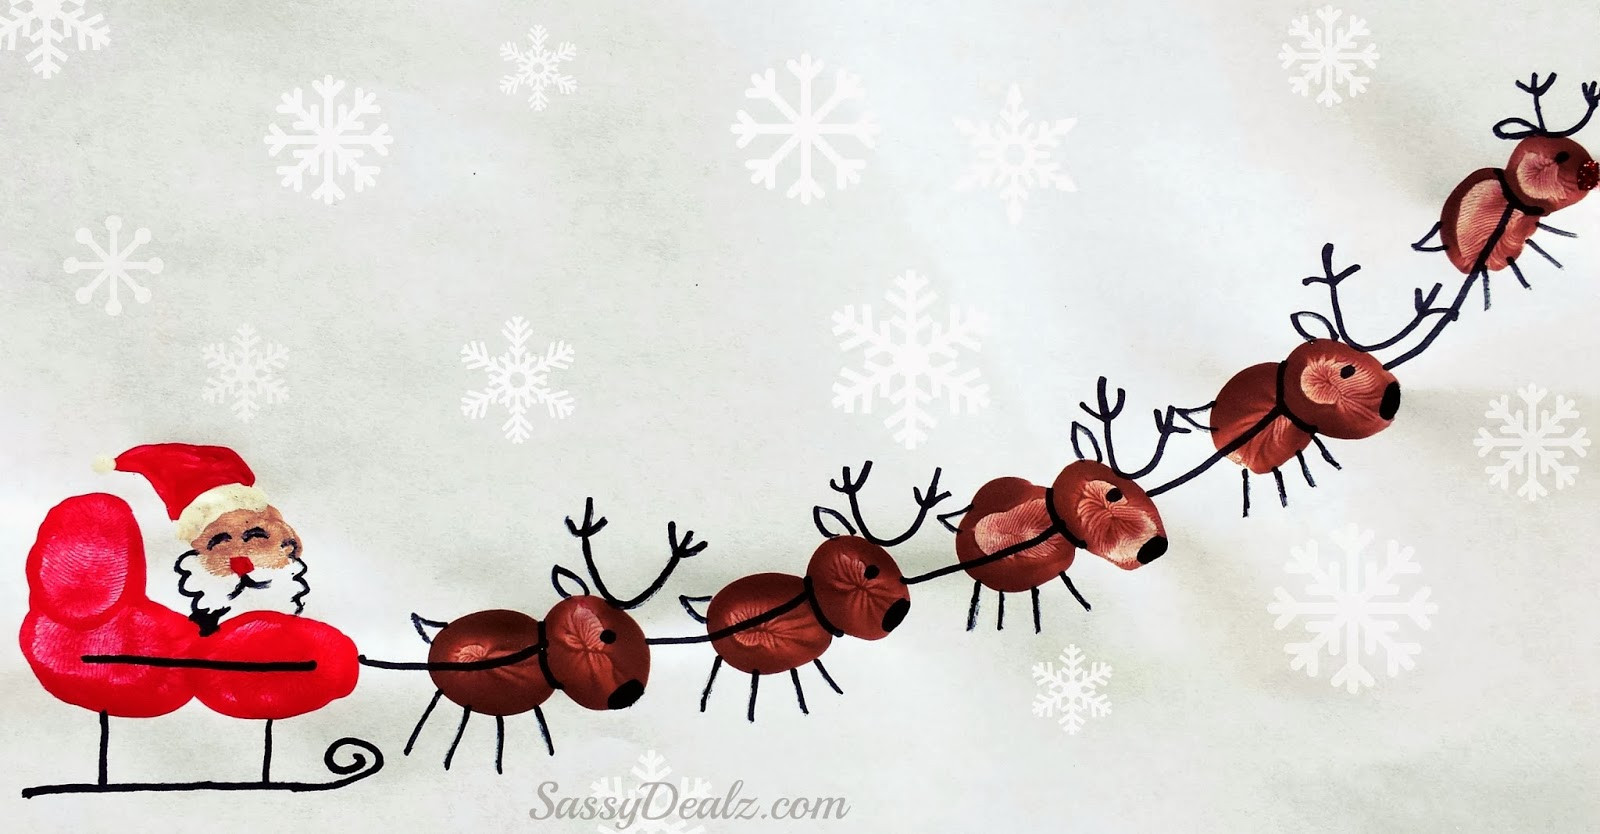 Christmas Painting Crafts
 Christmas Fingerprint Crafts U Create